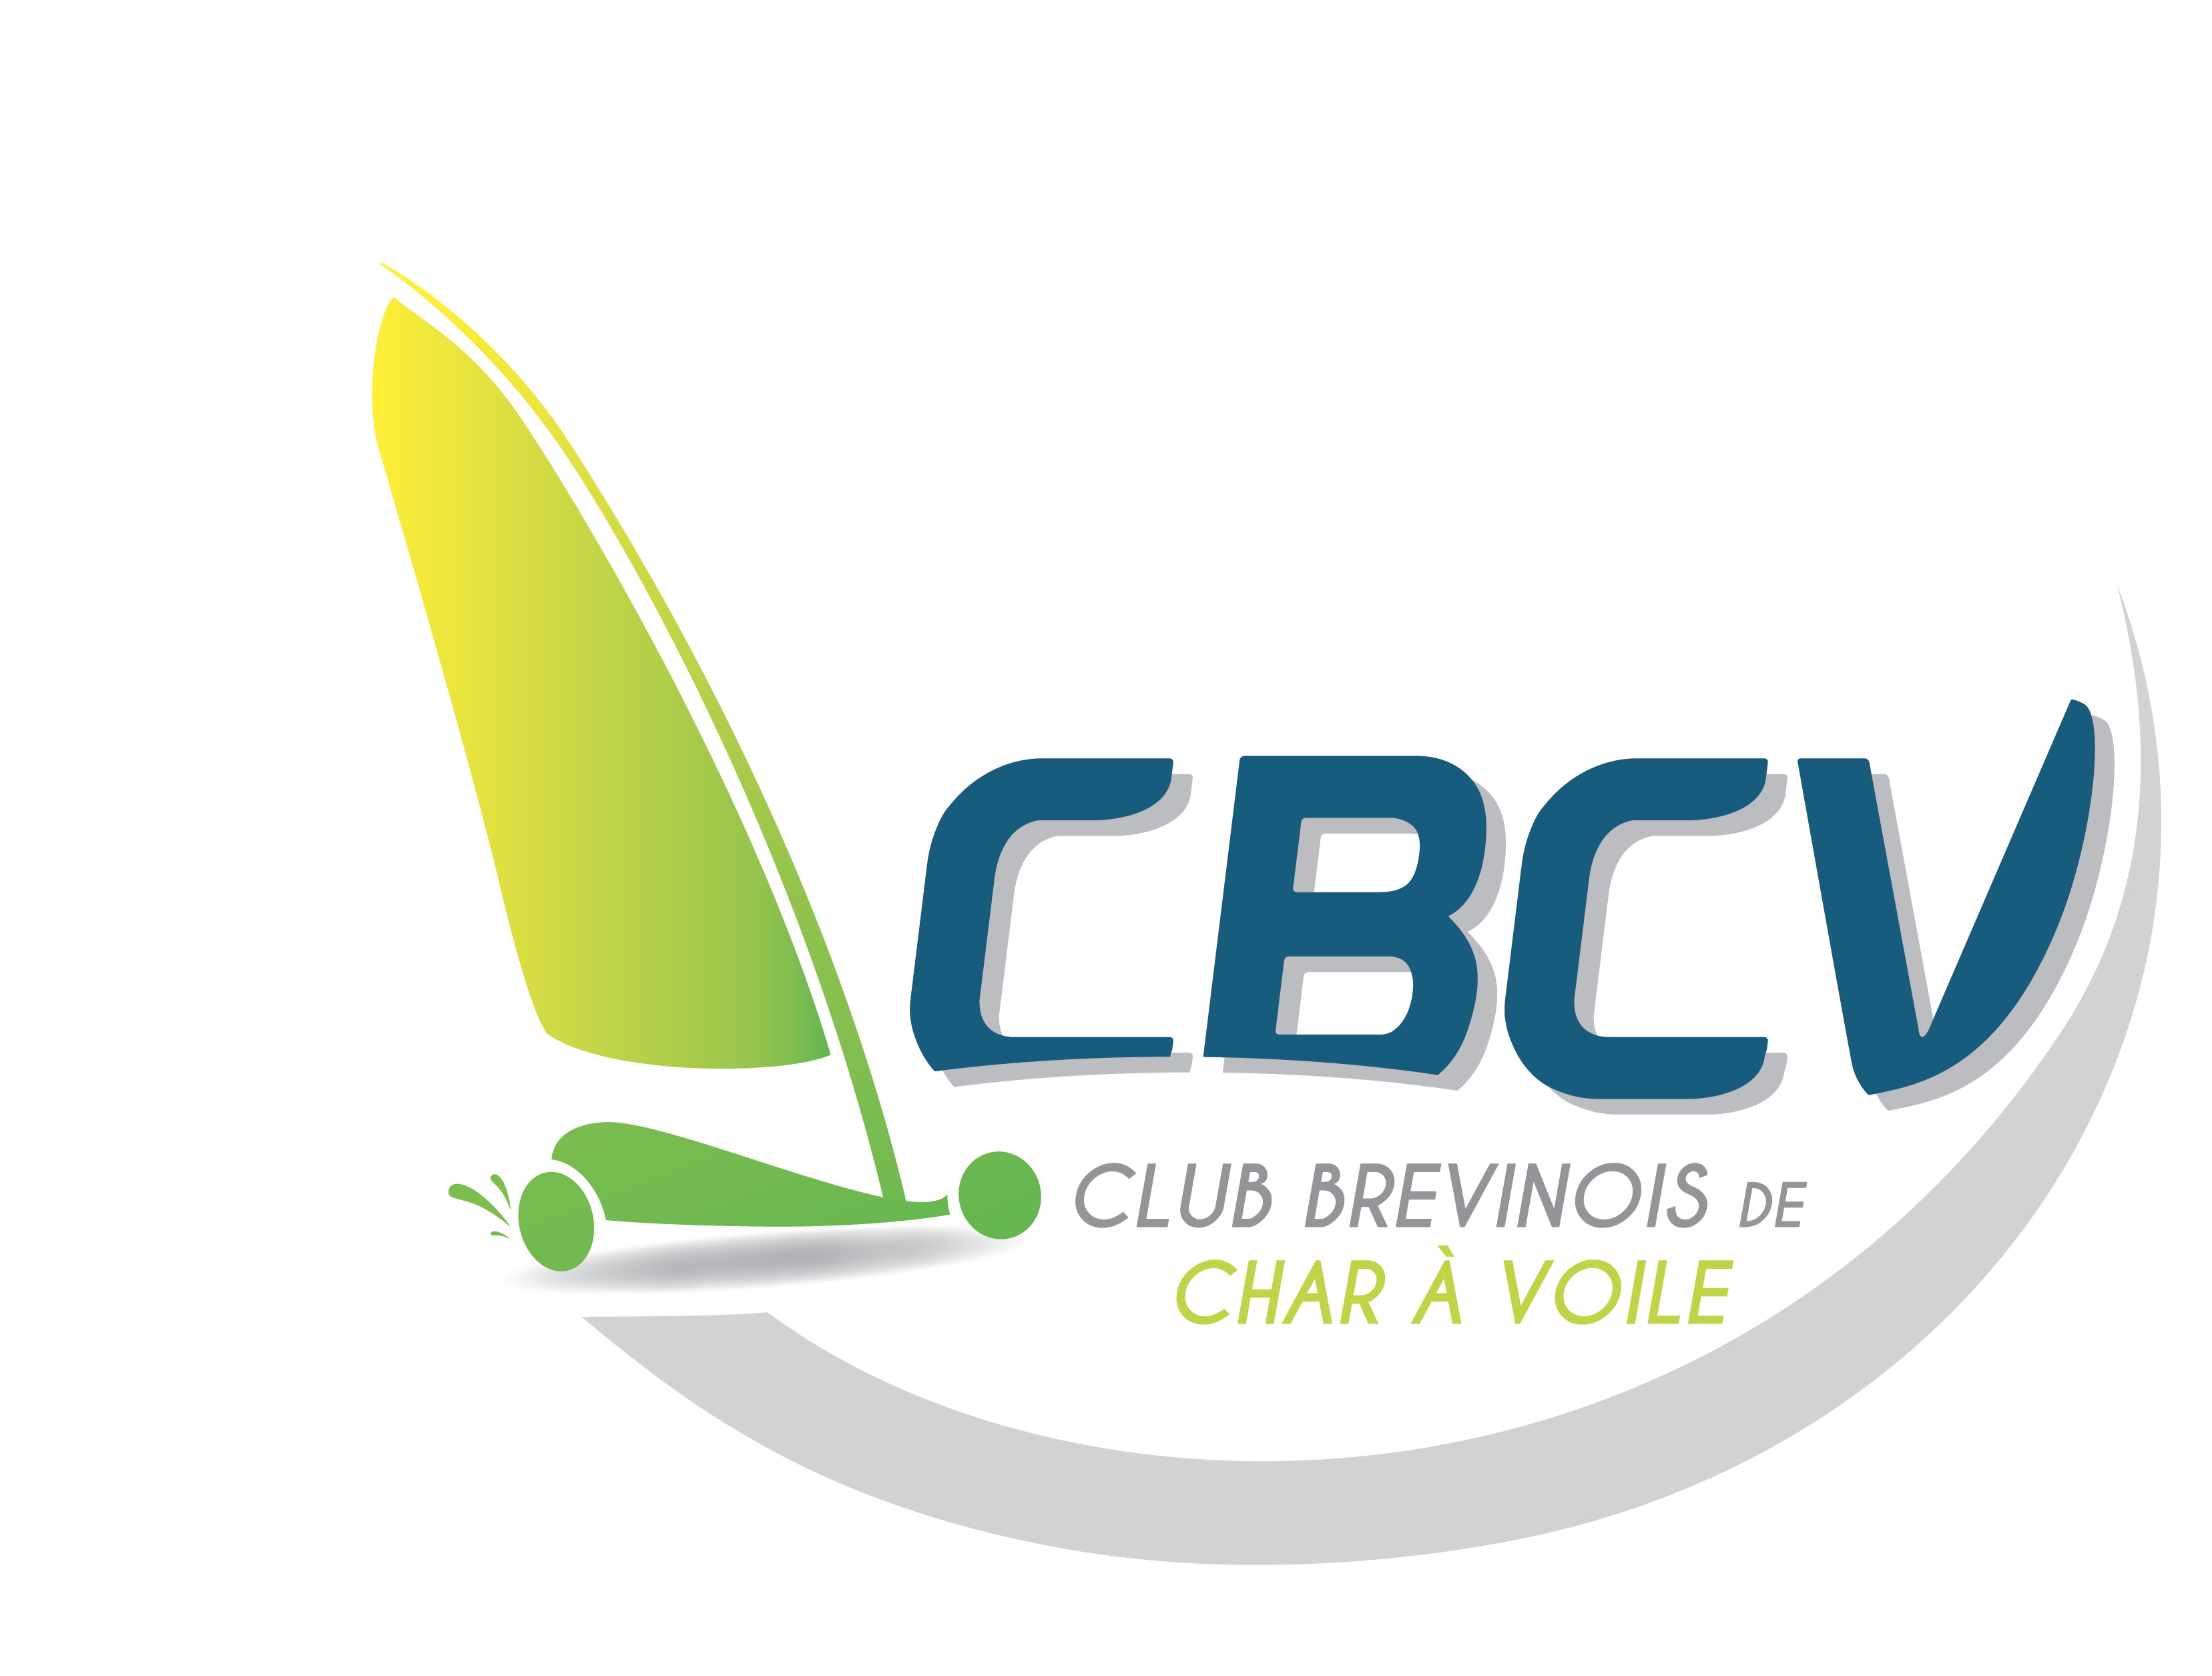 CBCV